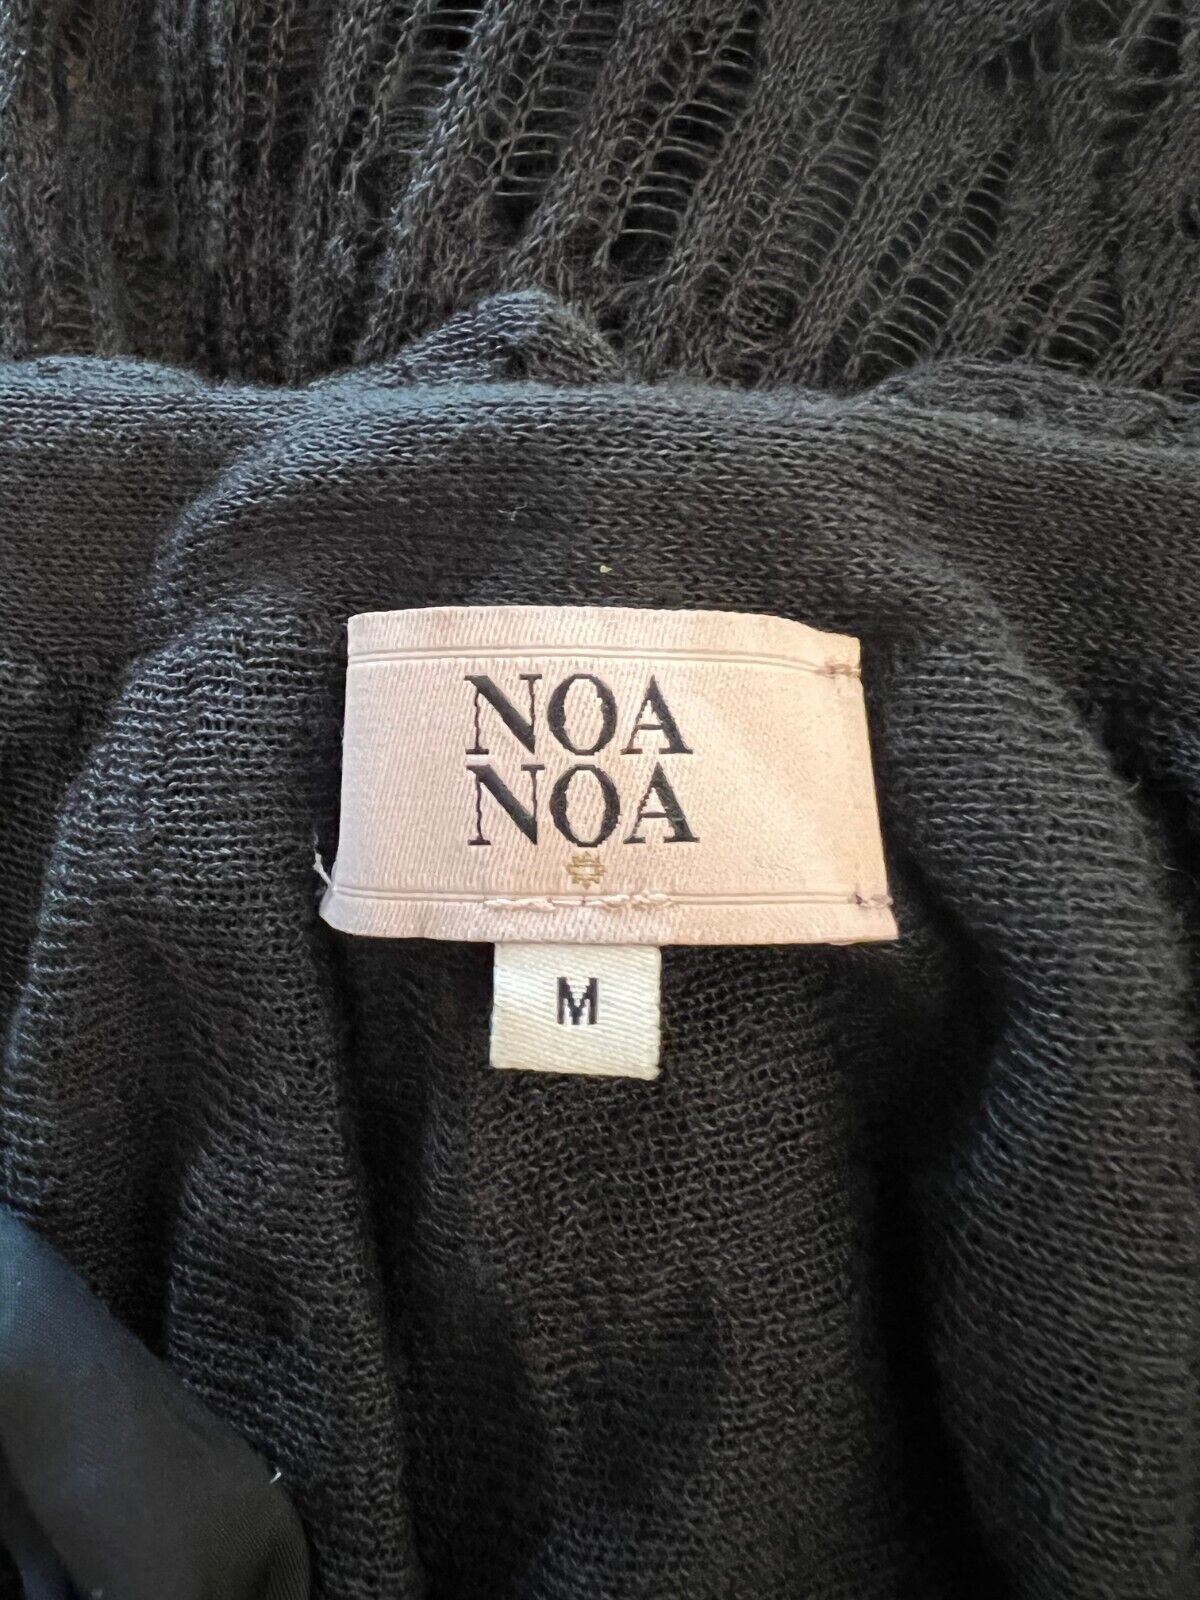 Noa Noa Black Lacy Fine Knit Top UK 12 EU 40 US 8 Timeless Fashions